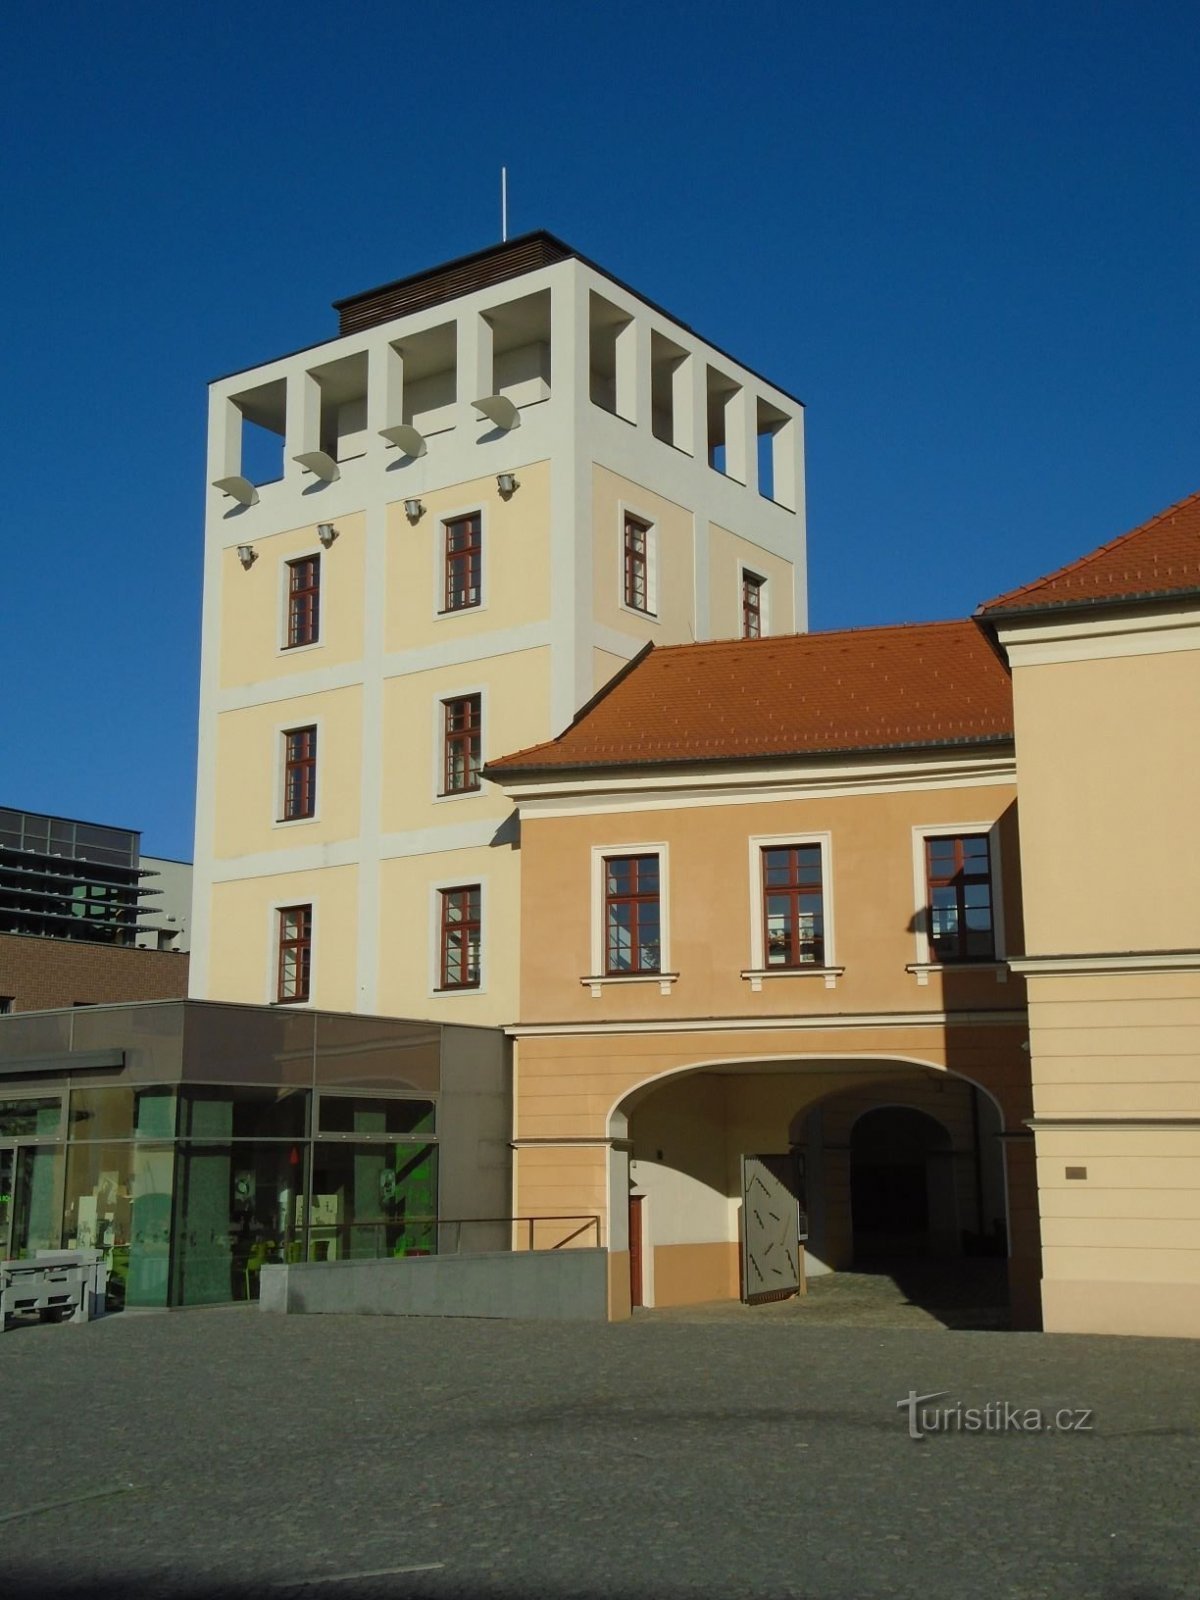 Nekdanji vodni stolp Kozinka (Hradec Králové, 17.11.2018. XNUMX. XNUMX)